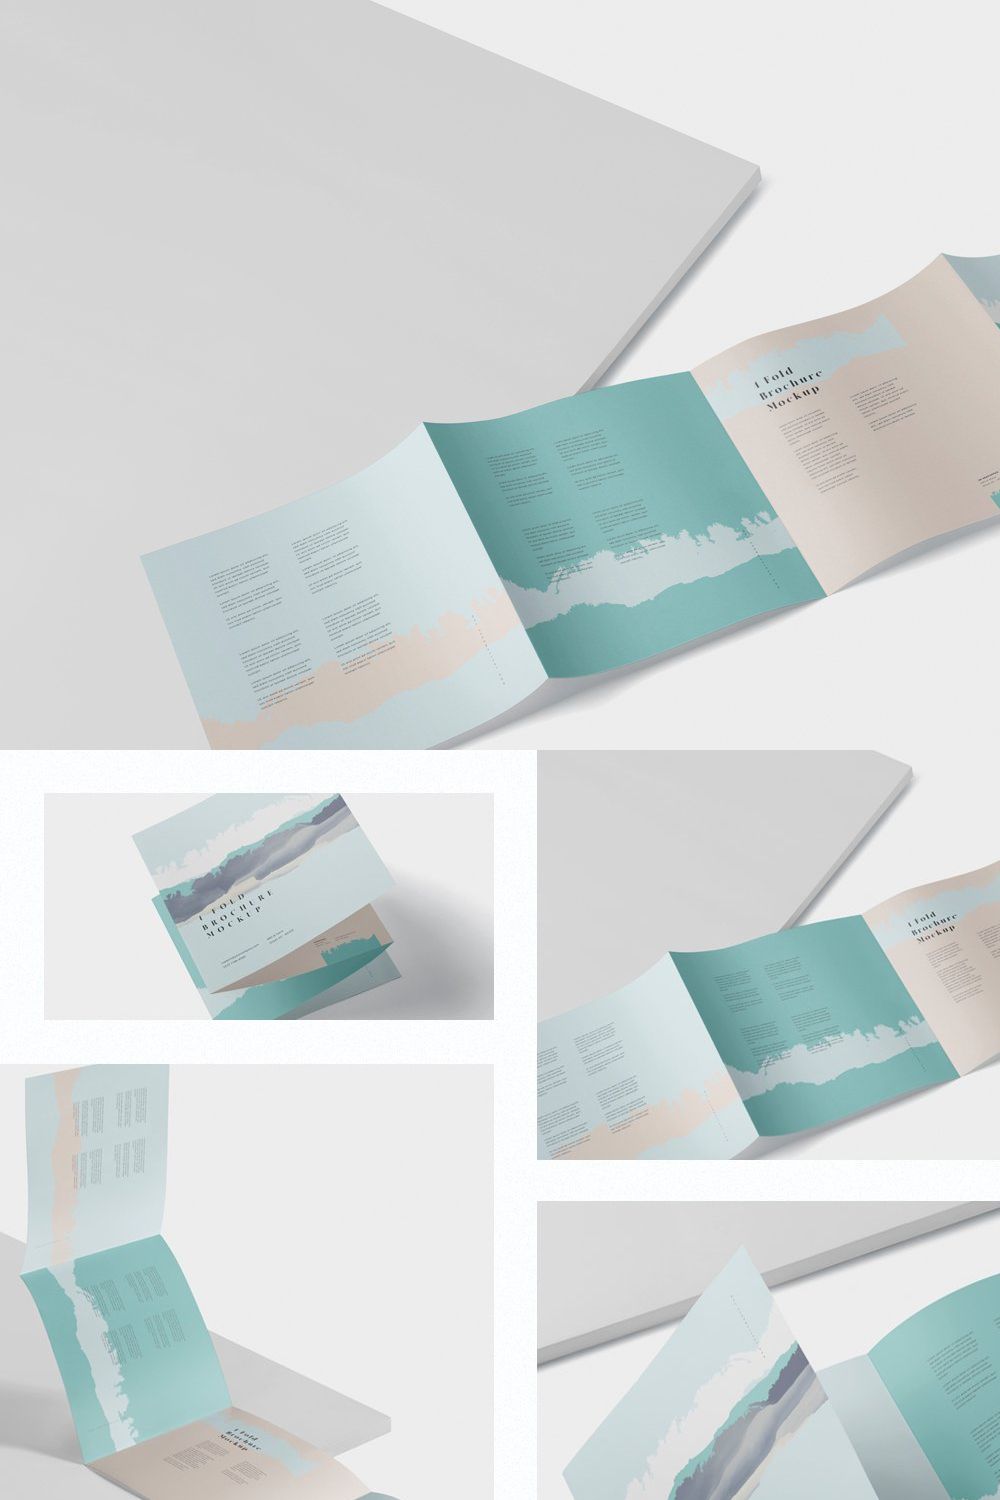 4-Fold Brochure Mockup - Square pinterest preview image.